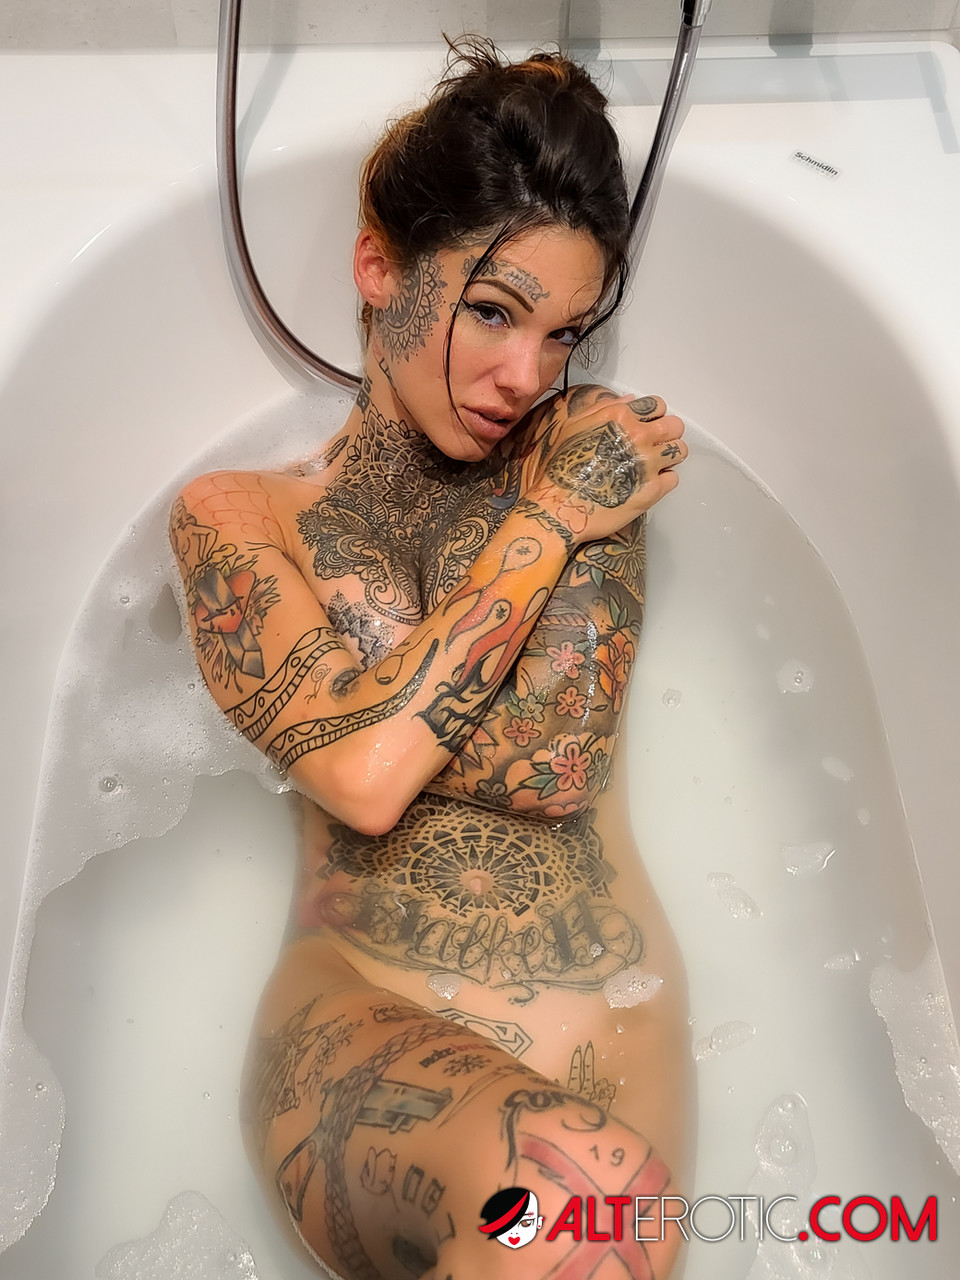 Tattooed girl Lucy Zzz takes a bath after POV sex in a bathtub porn photo #422562628 | Alt Erotic Pics, Lucy Zzz, Tattoo, mobile porn